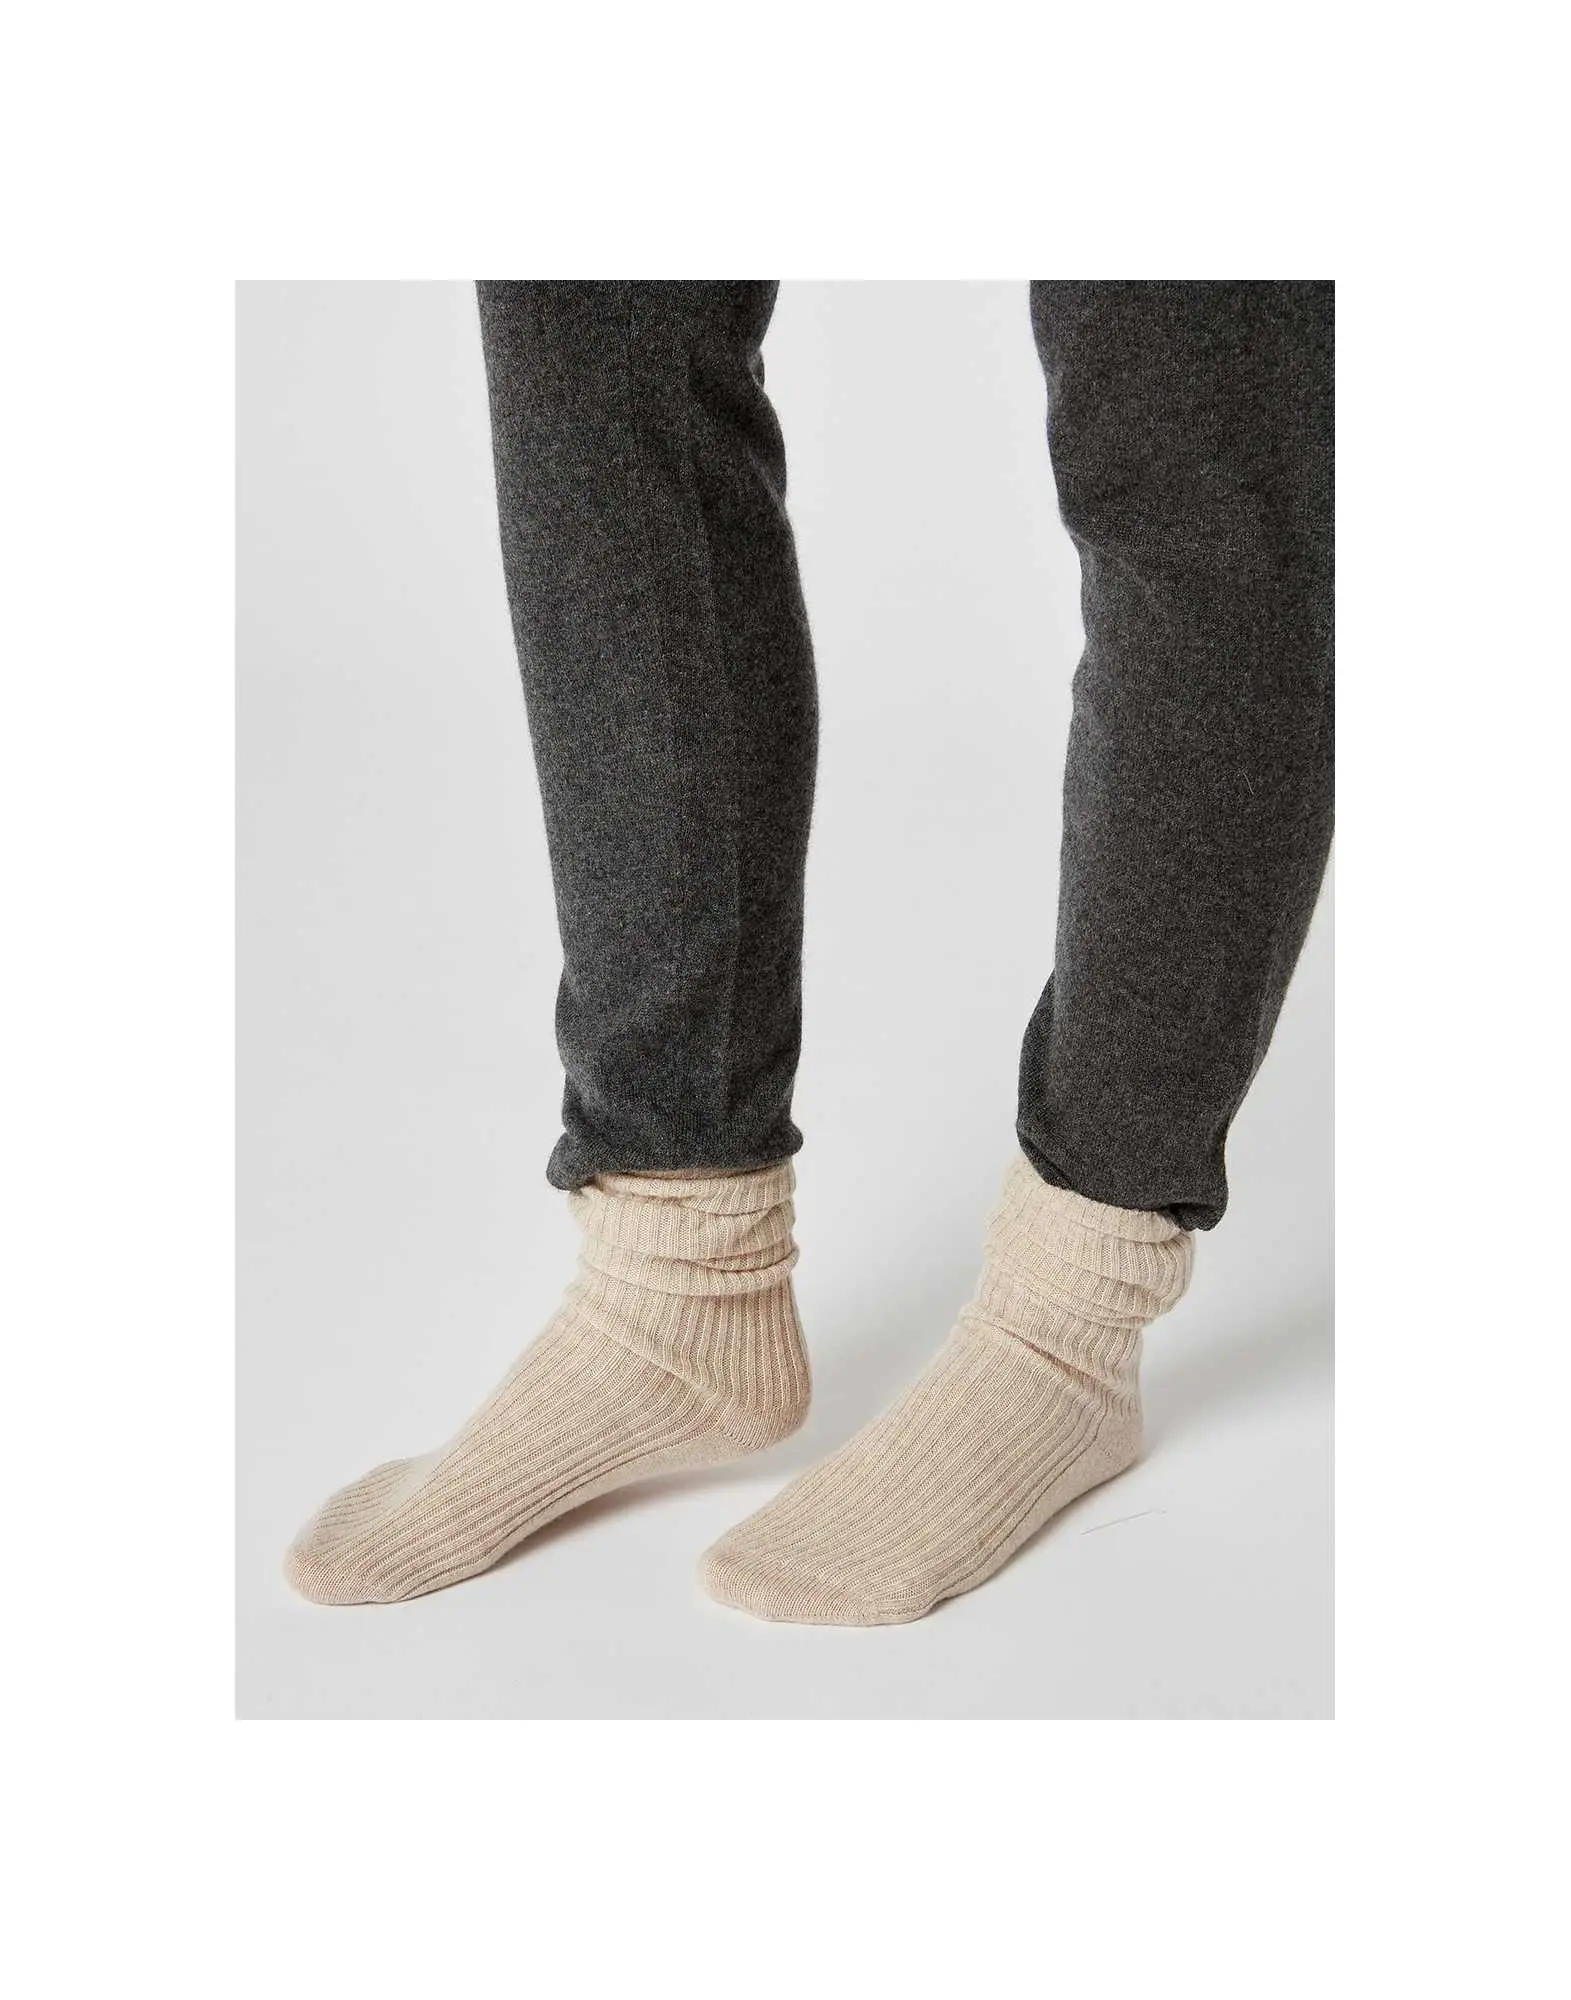 Socks CACHE 014 in camel - Lingerie le Chat